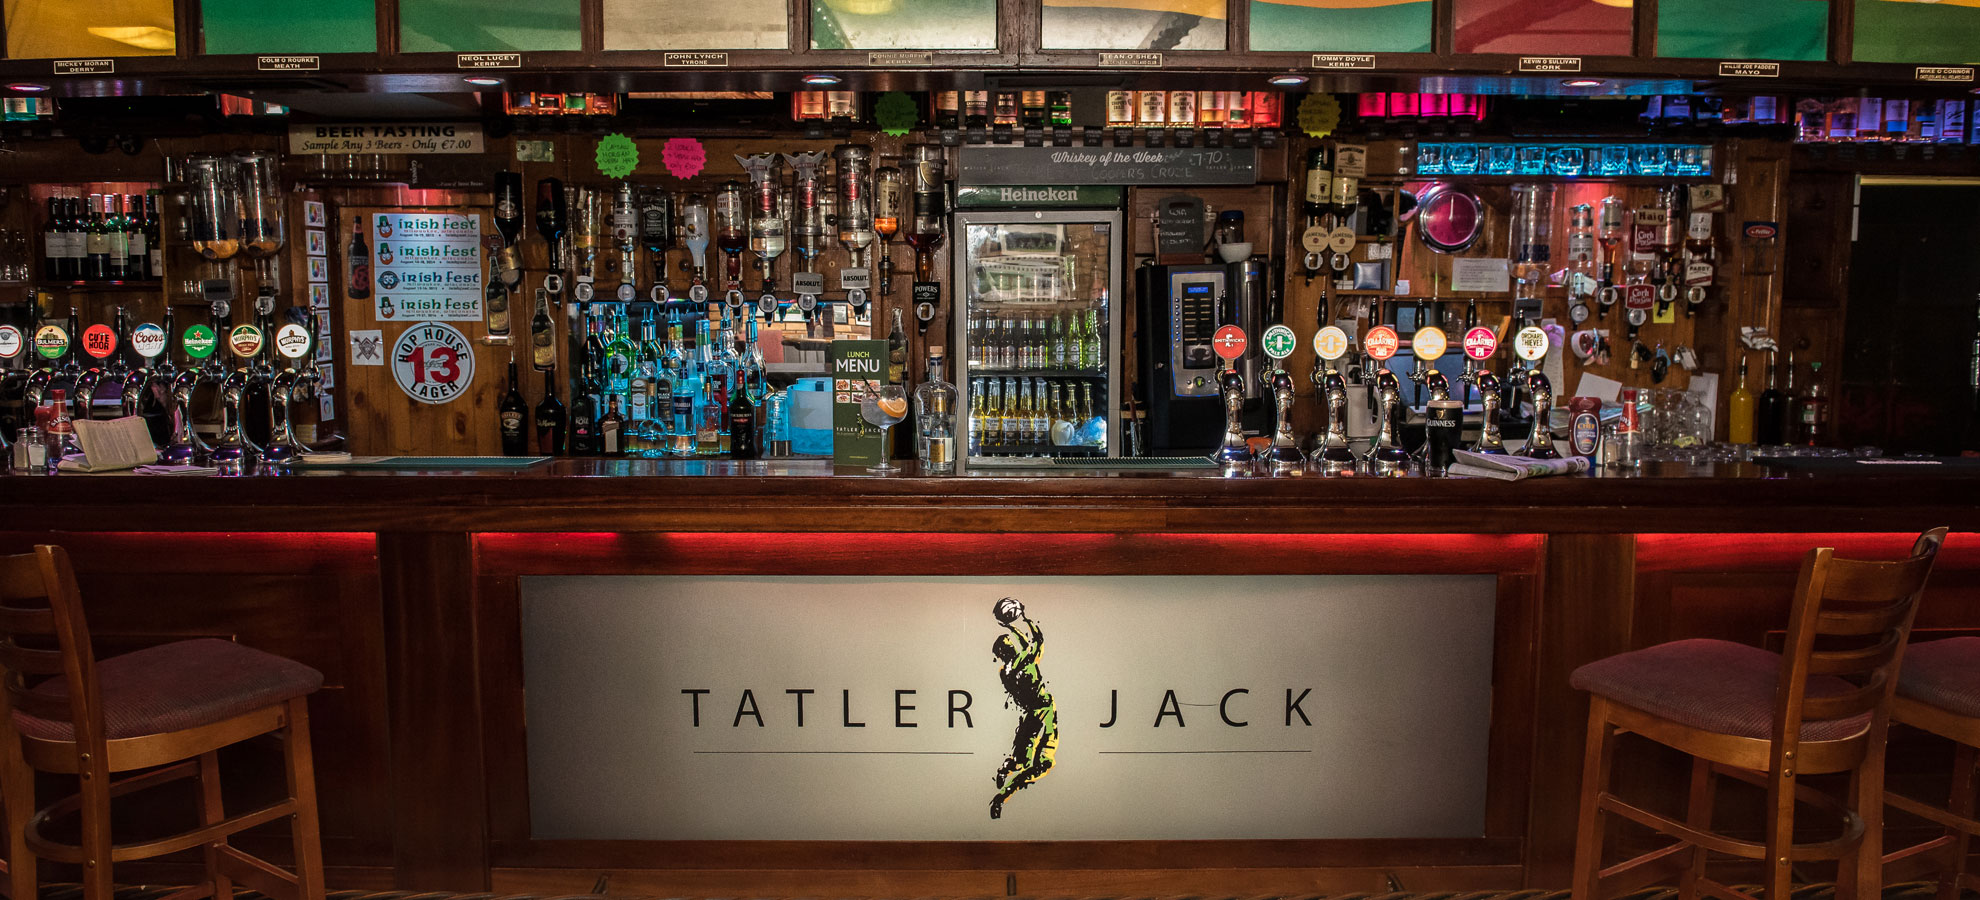 Killarney Bar - Tatler Jack